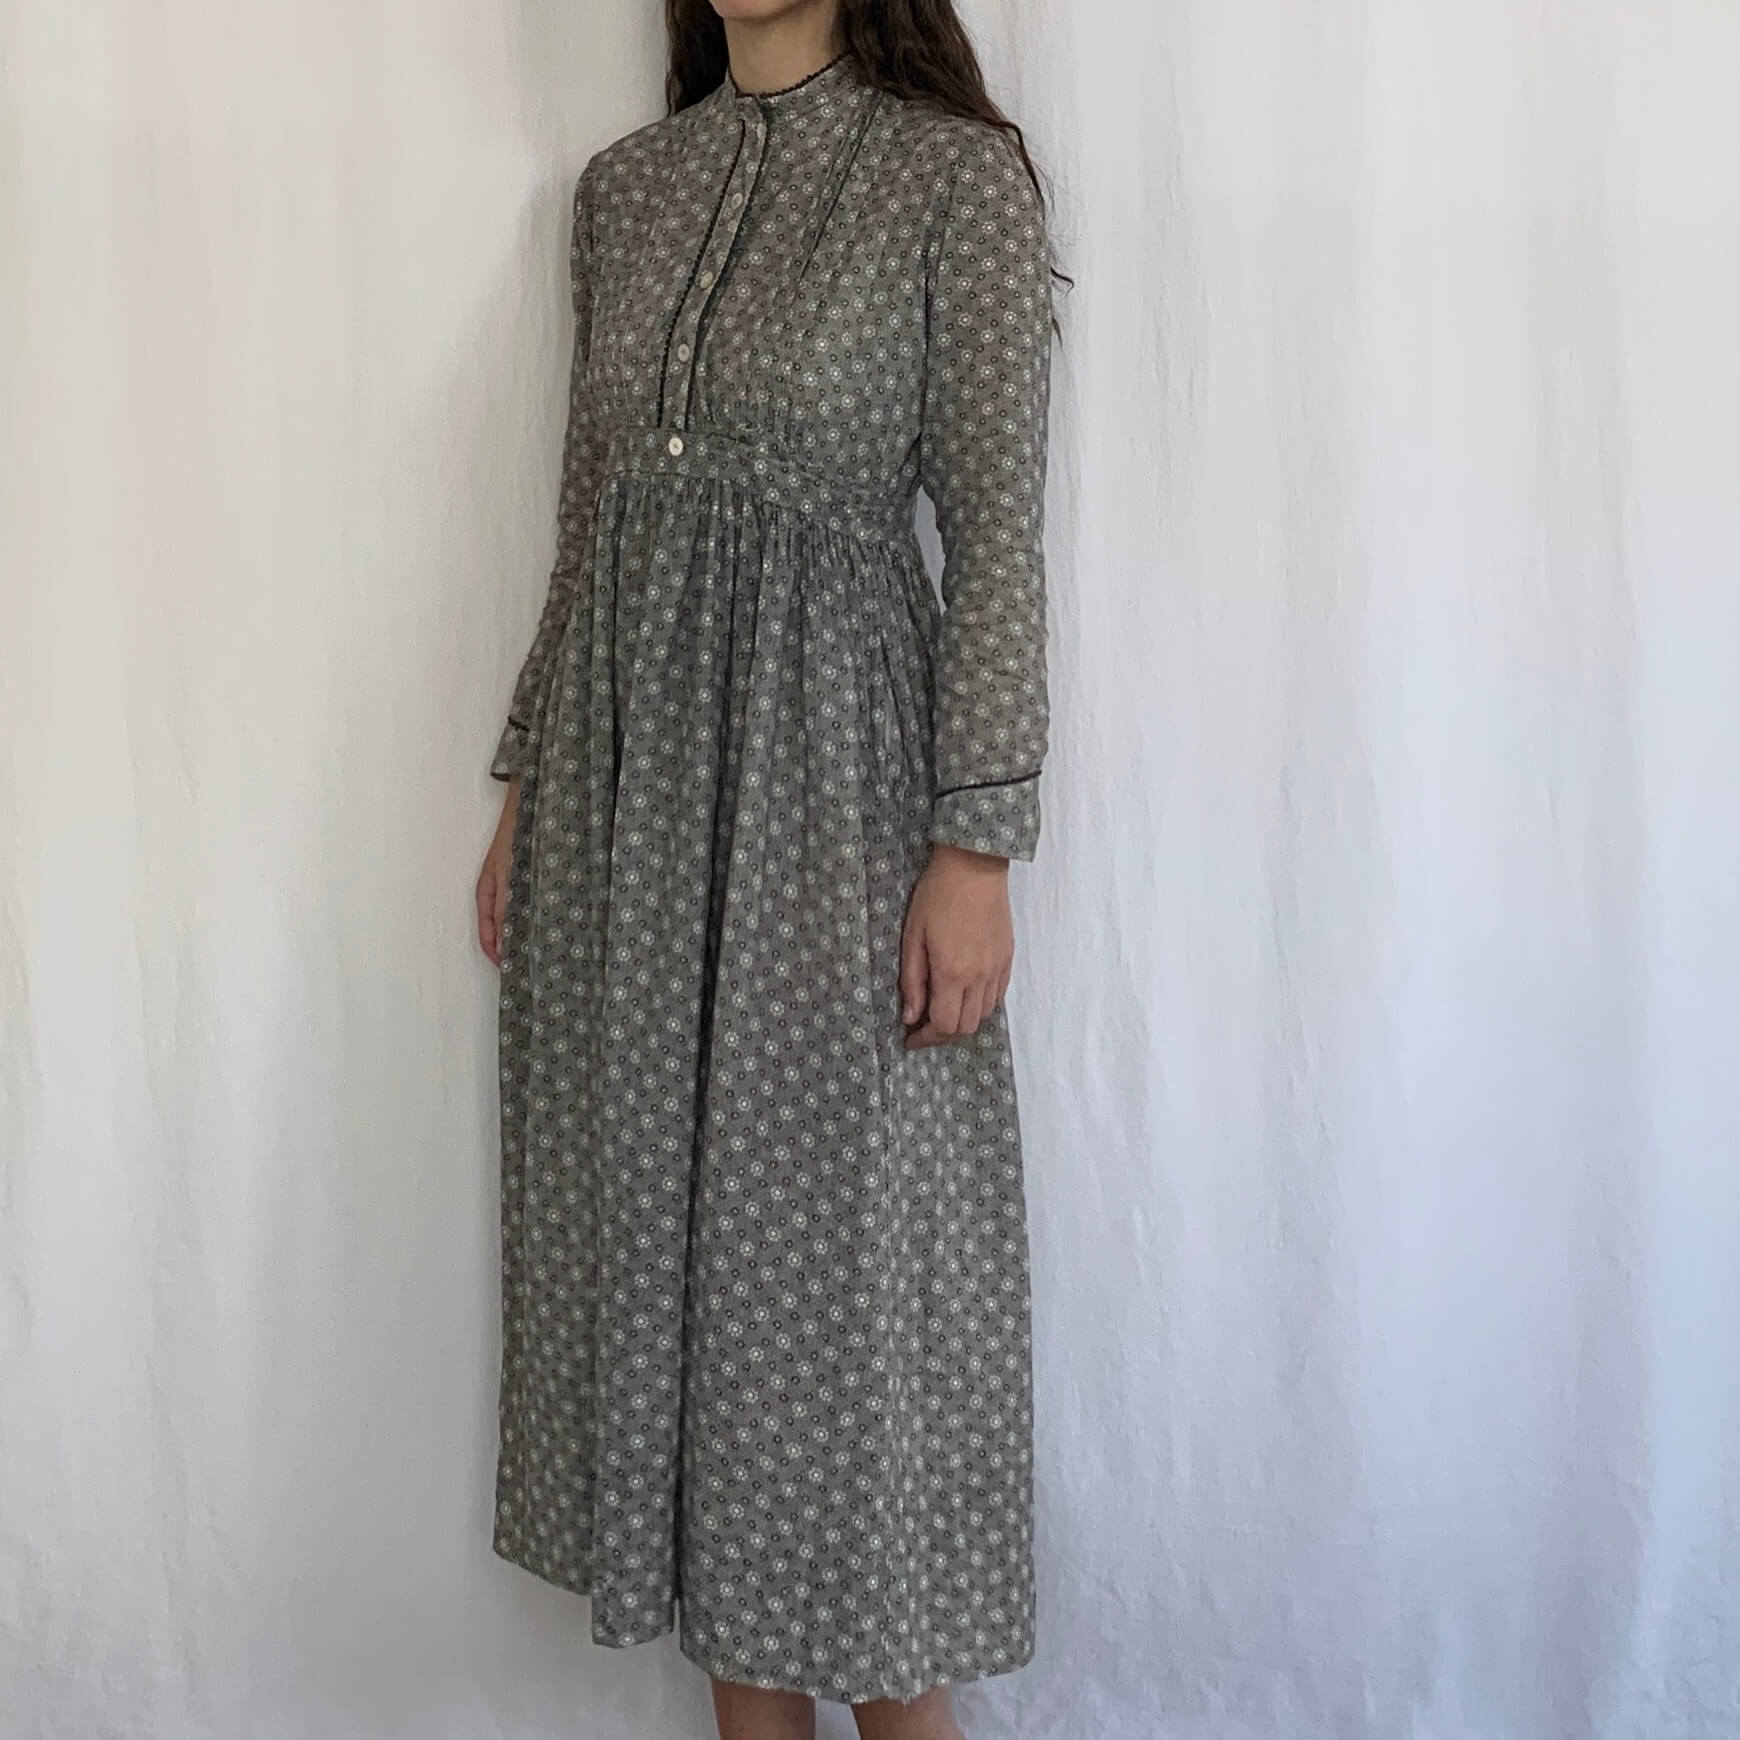 Vintage gray cotton Edwardian work dress on a model